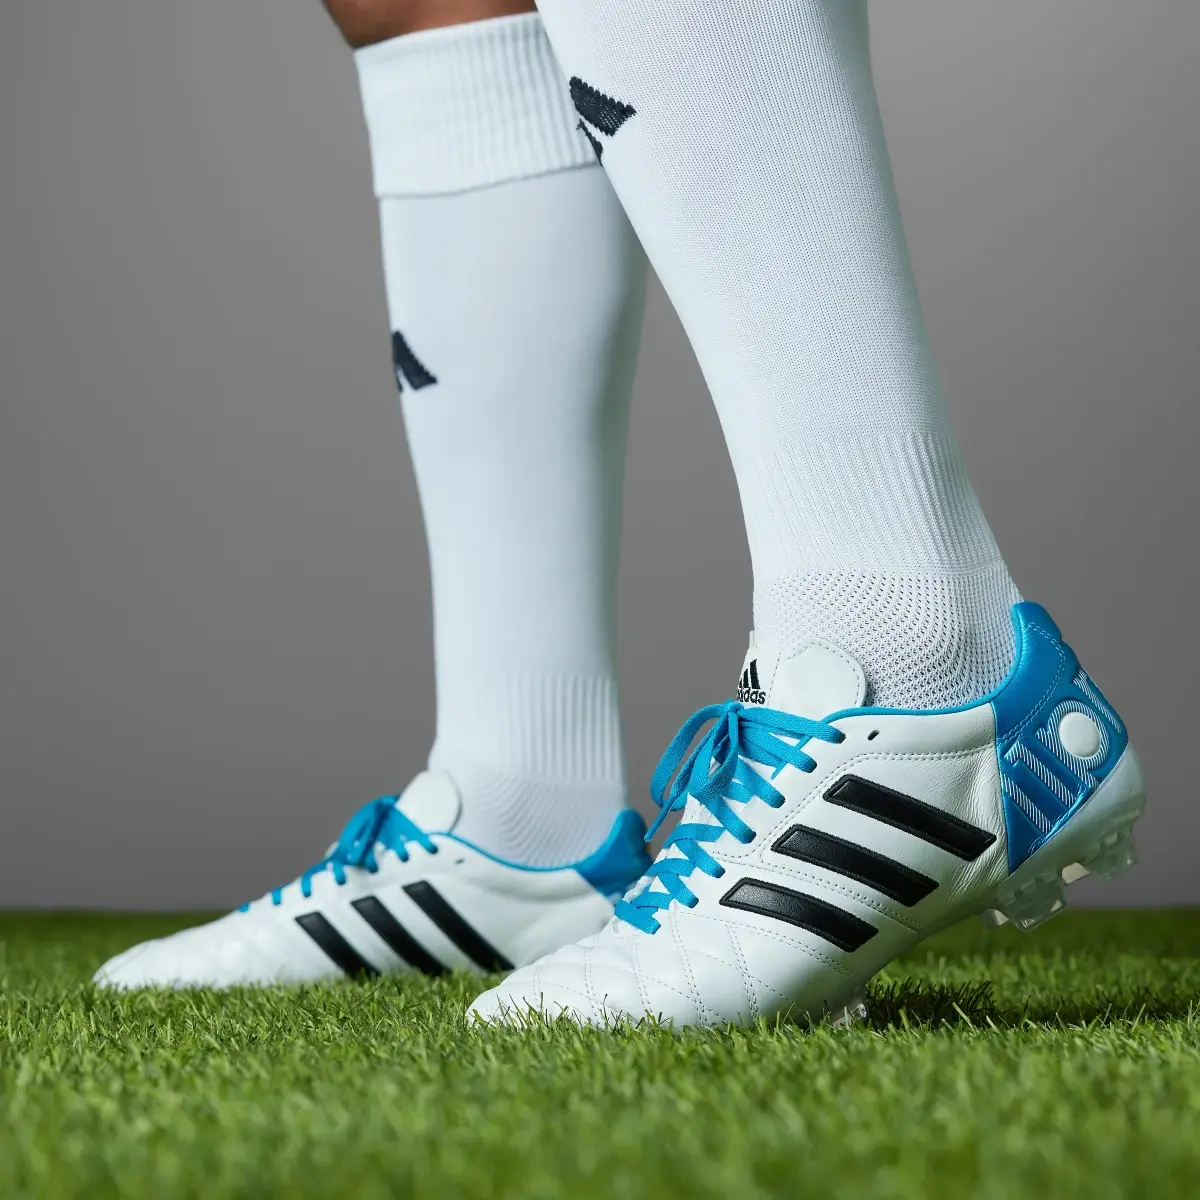 Adidas Botas de Futebol 11Pro Toni Kroos – Piso firme. 3